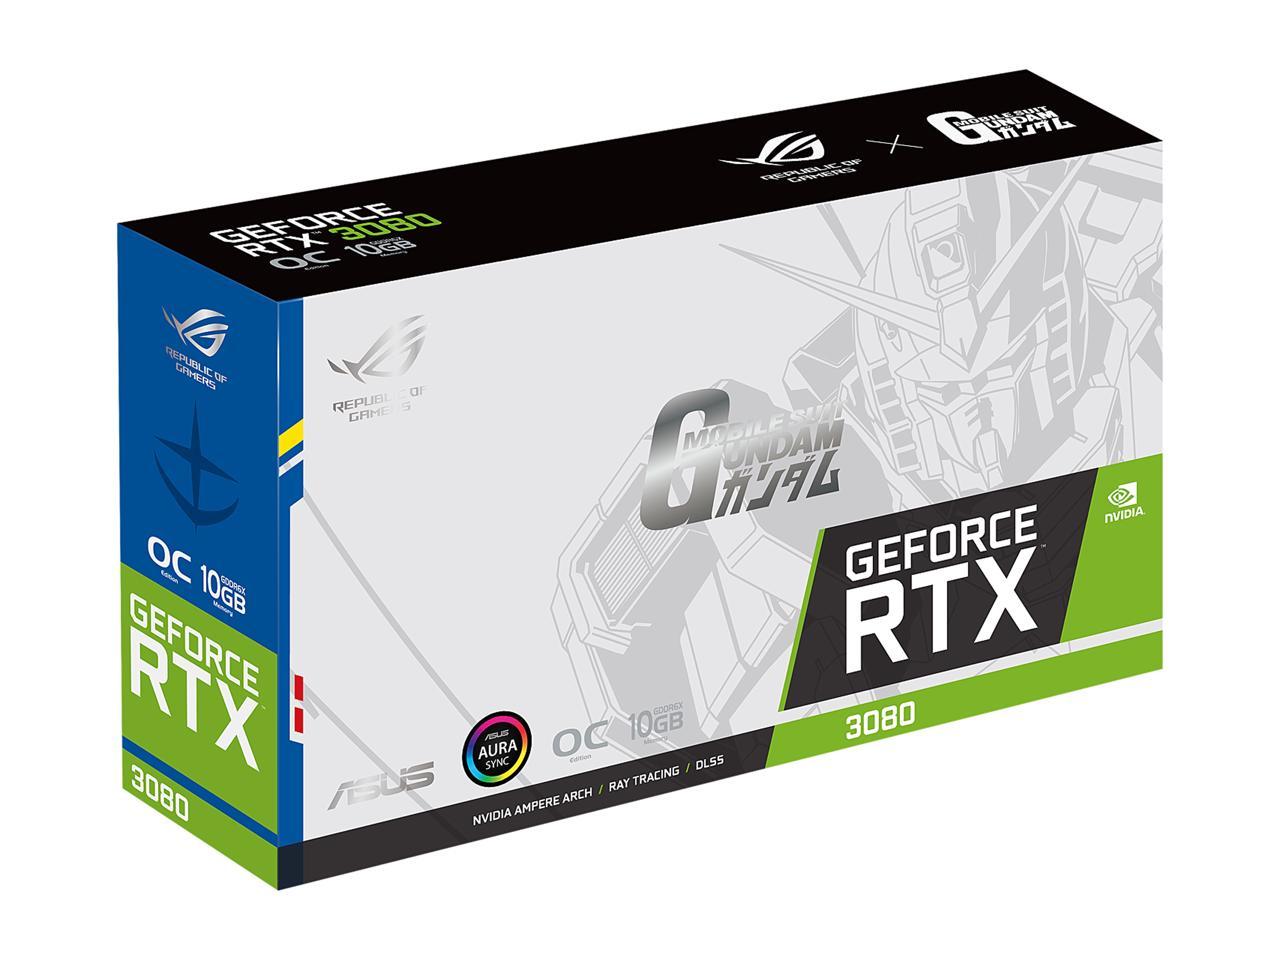 ASUS ROG STRIX NVIDIA GeForce RTX 3080 GUNDAM EDITION Graphics Card  (Limited Edition, PCIe 4.0, 10GB GDDR6X, HDMI 2.1, DisplayPort 1.4a,  Axial-tech 